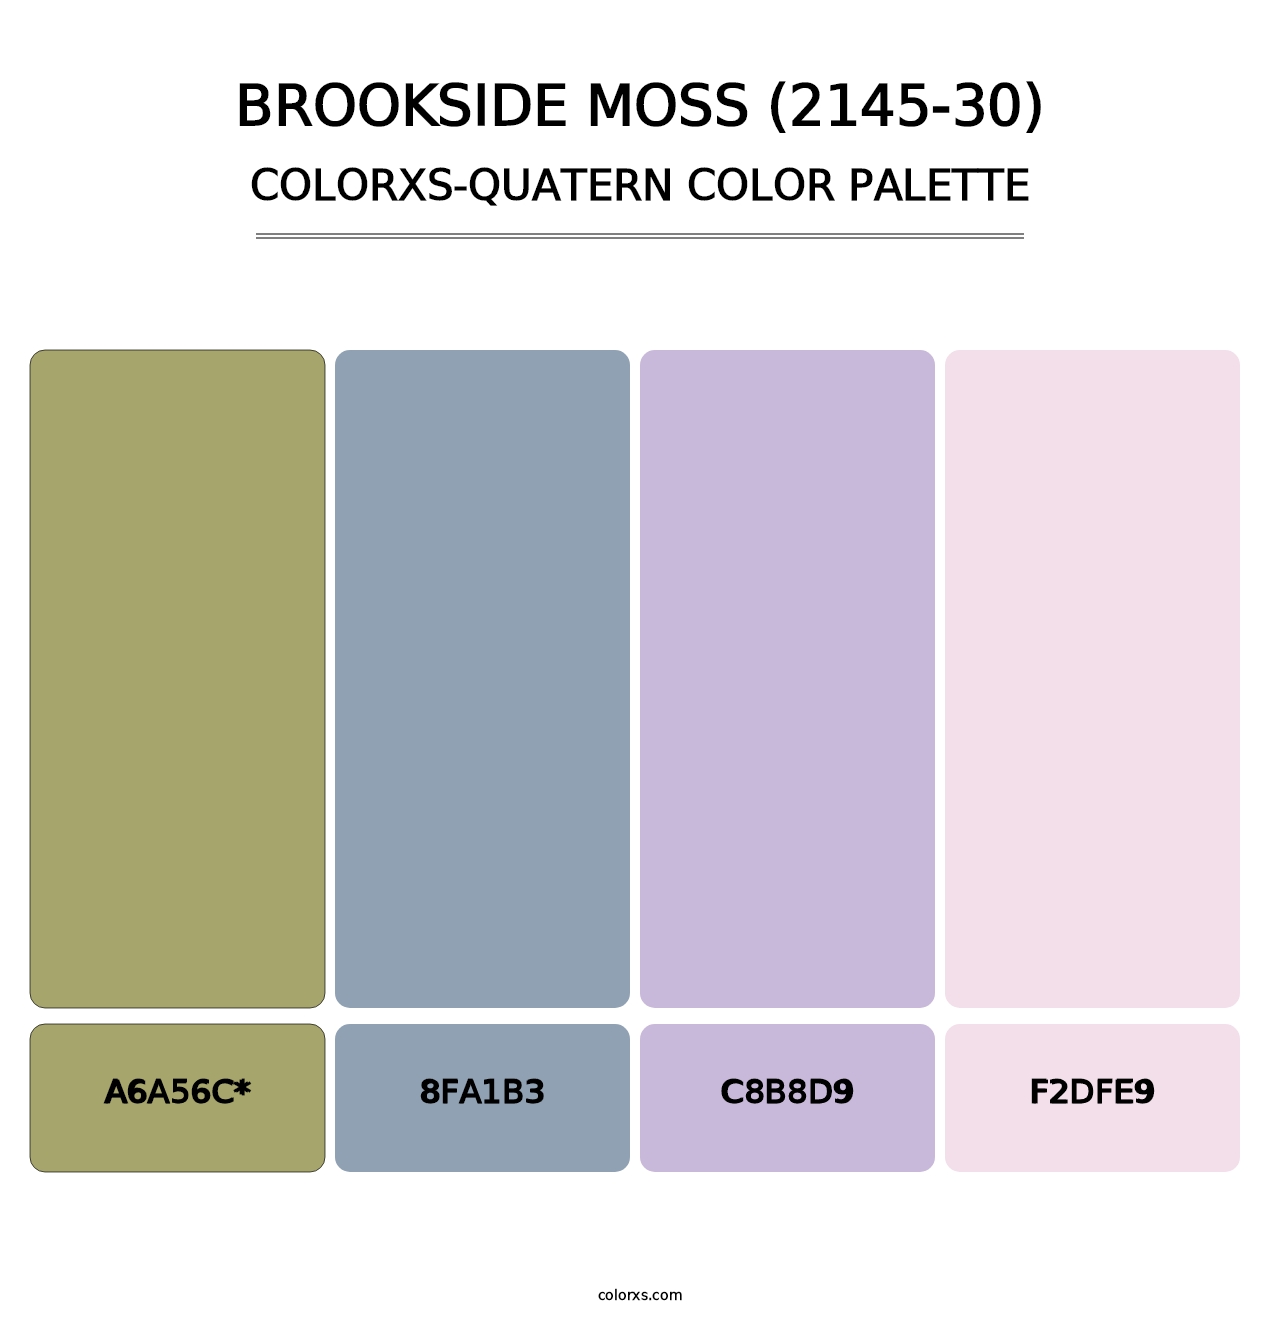 Brookside Moss (2145-30) - Colorxs Quatern Palette